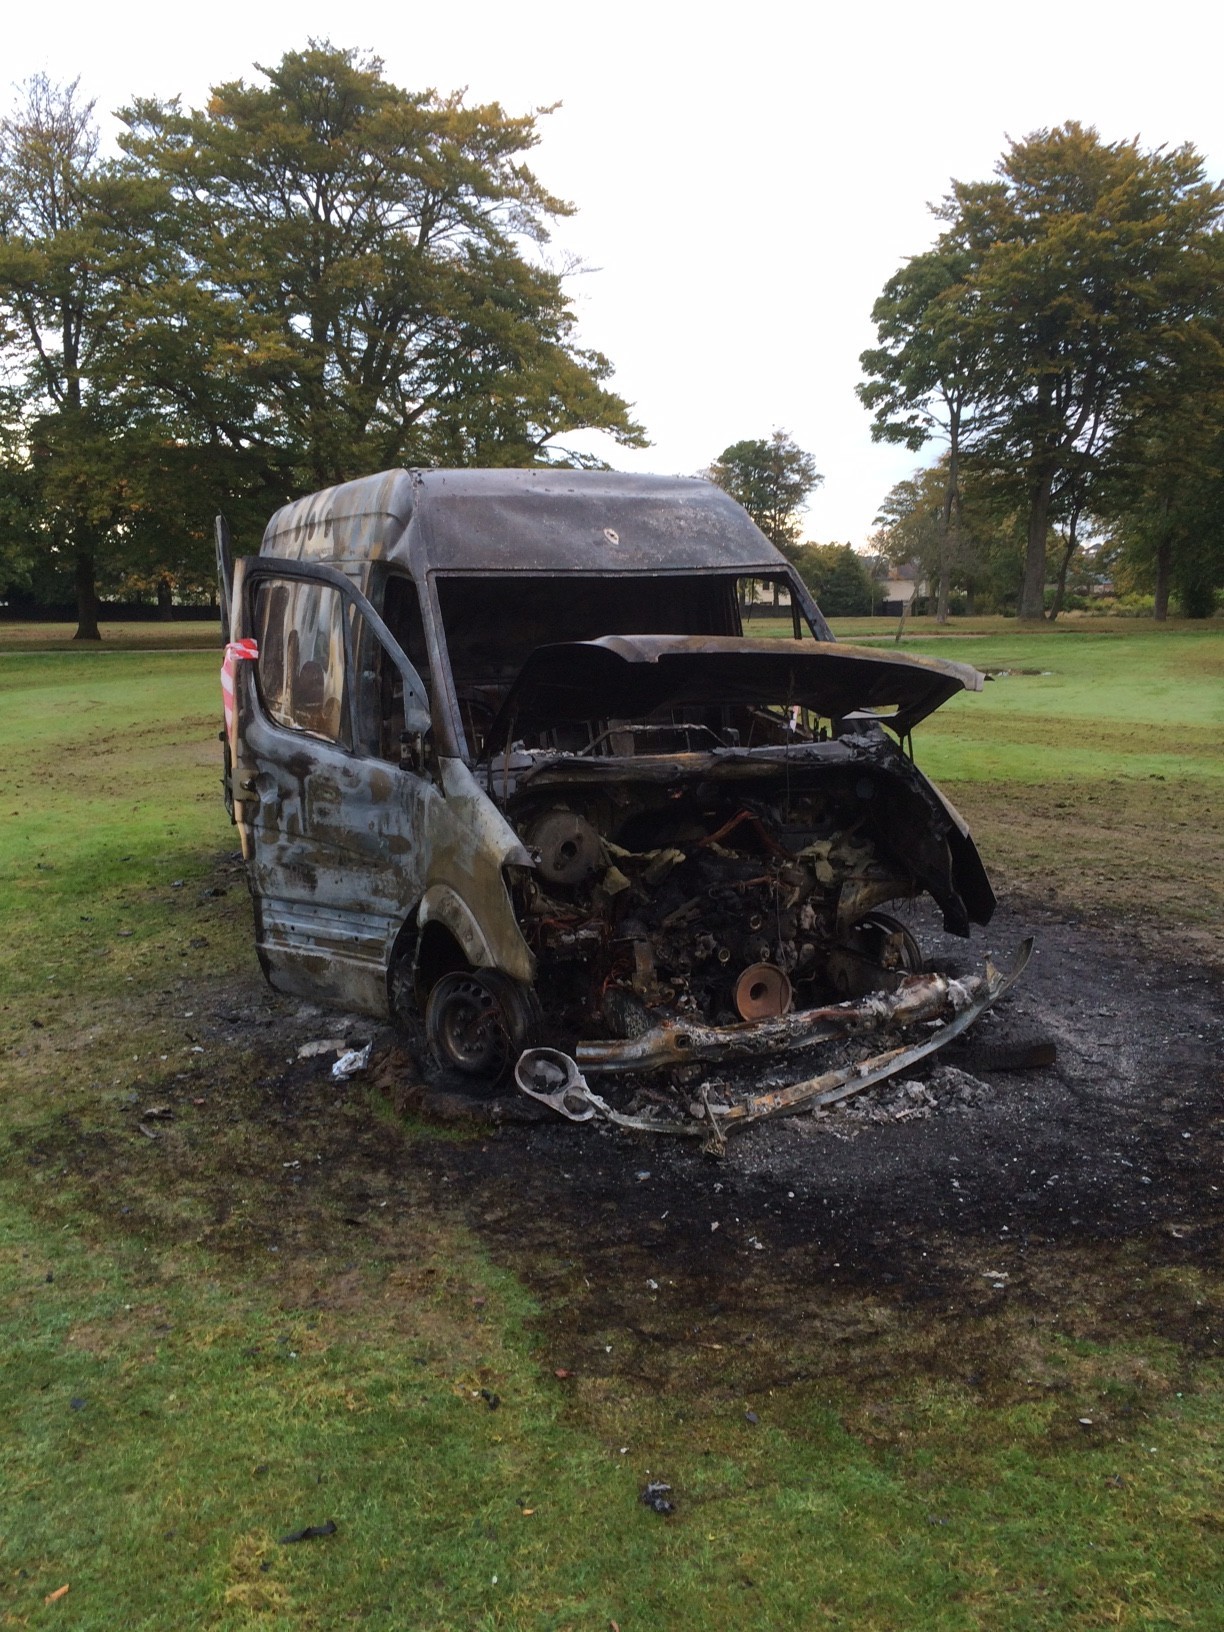 The burnt out van in Stewart Park, Aberdeen